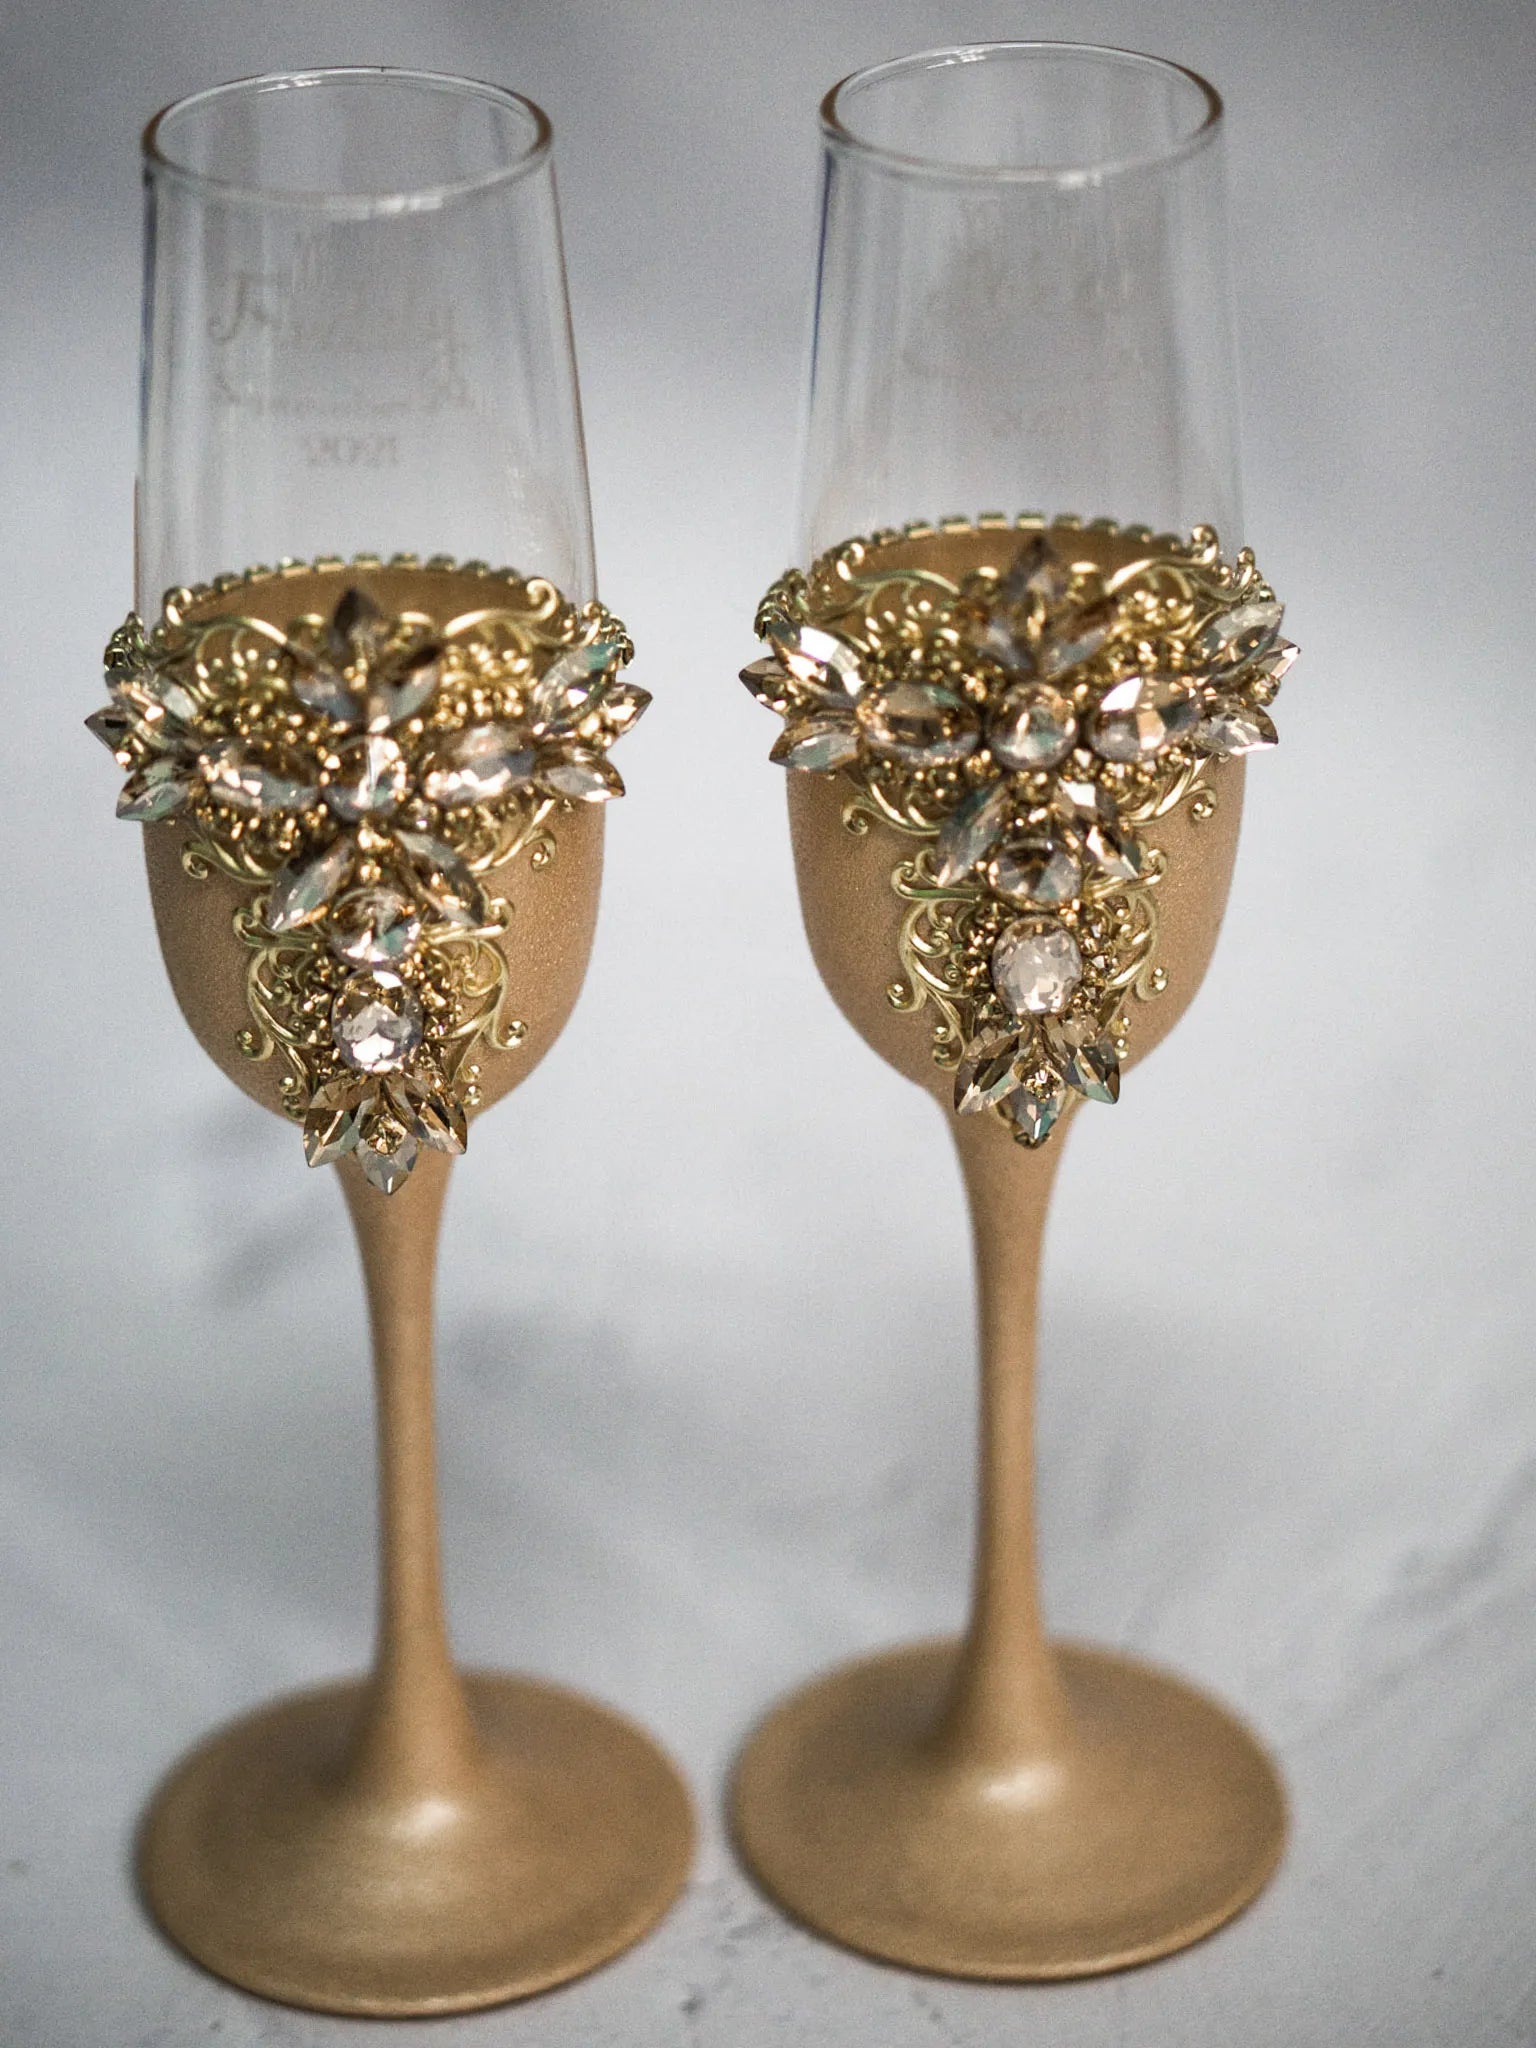 Gloria Gold Champagne Glasses